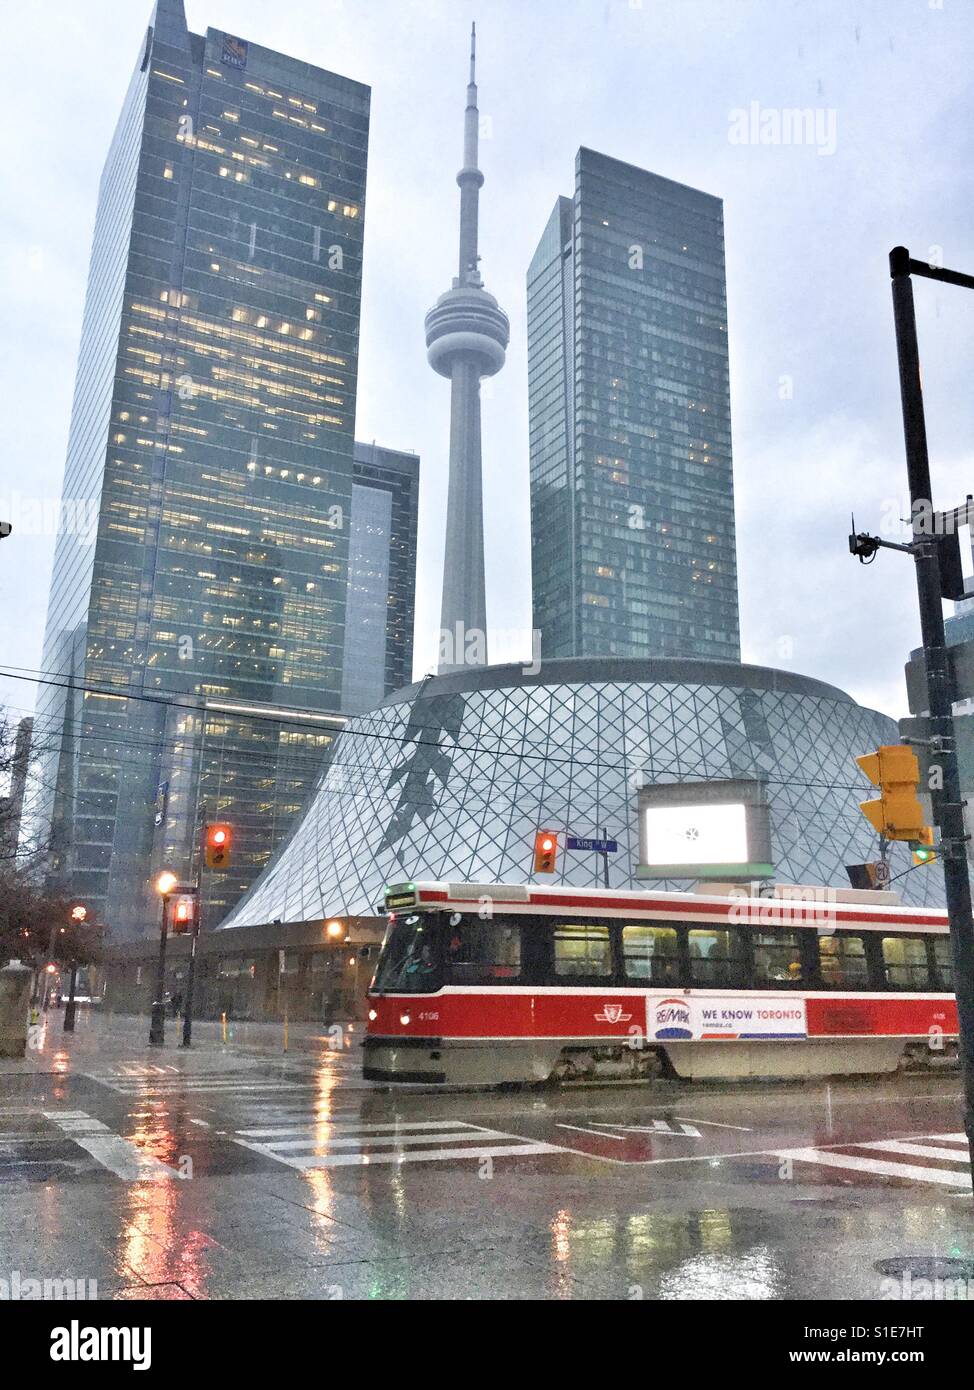 Downtown Toronto on a rainy evening. Stock Photo